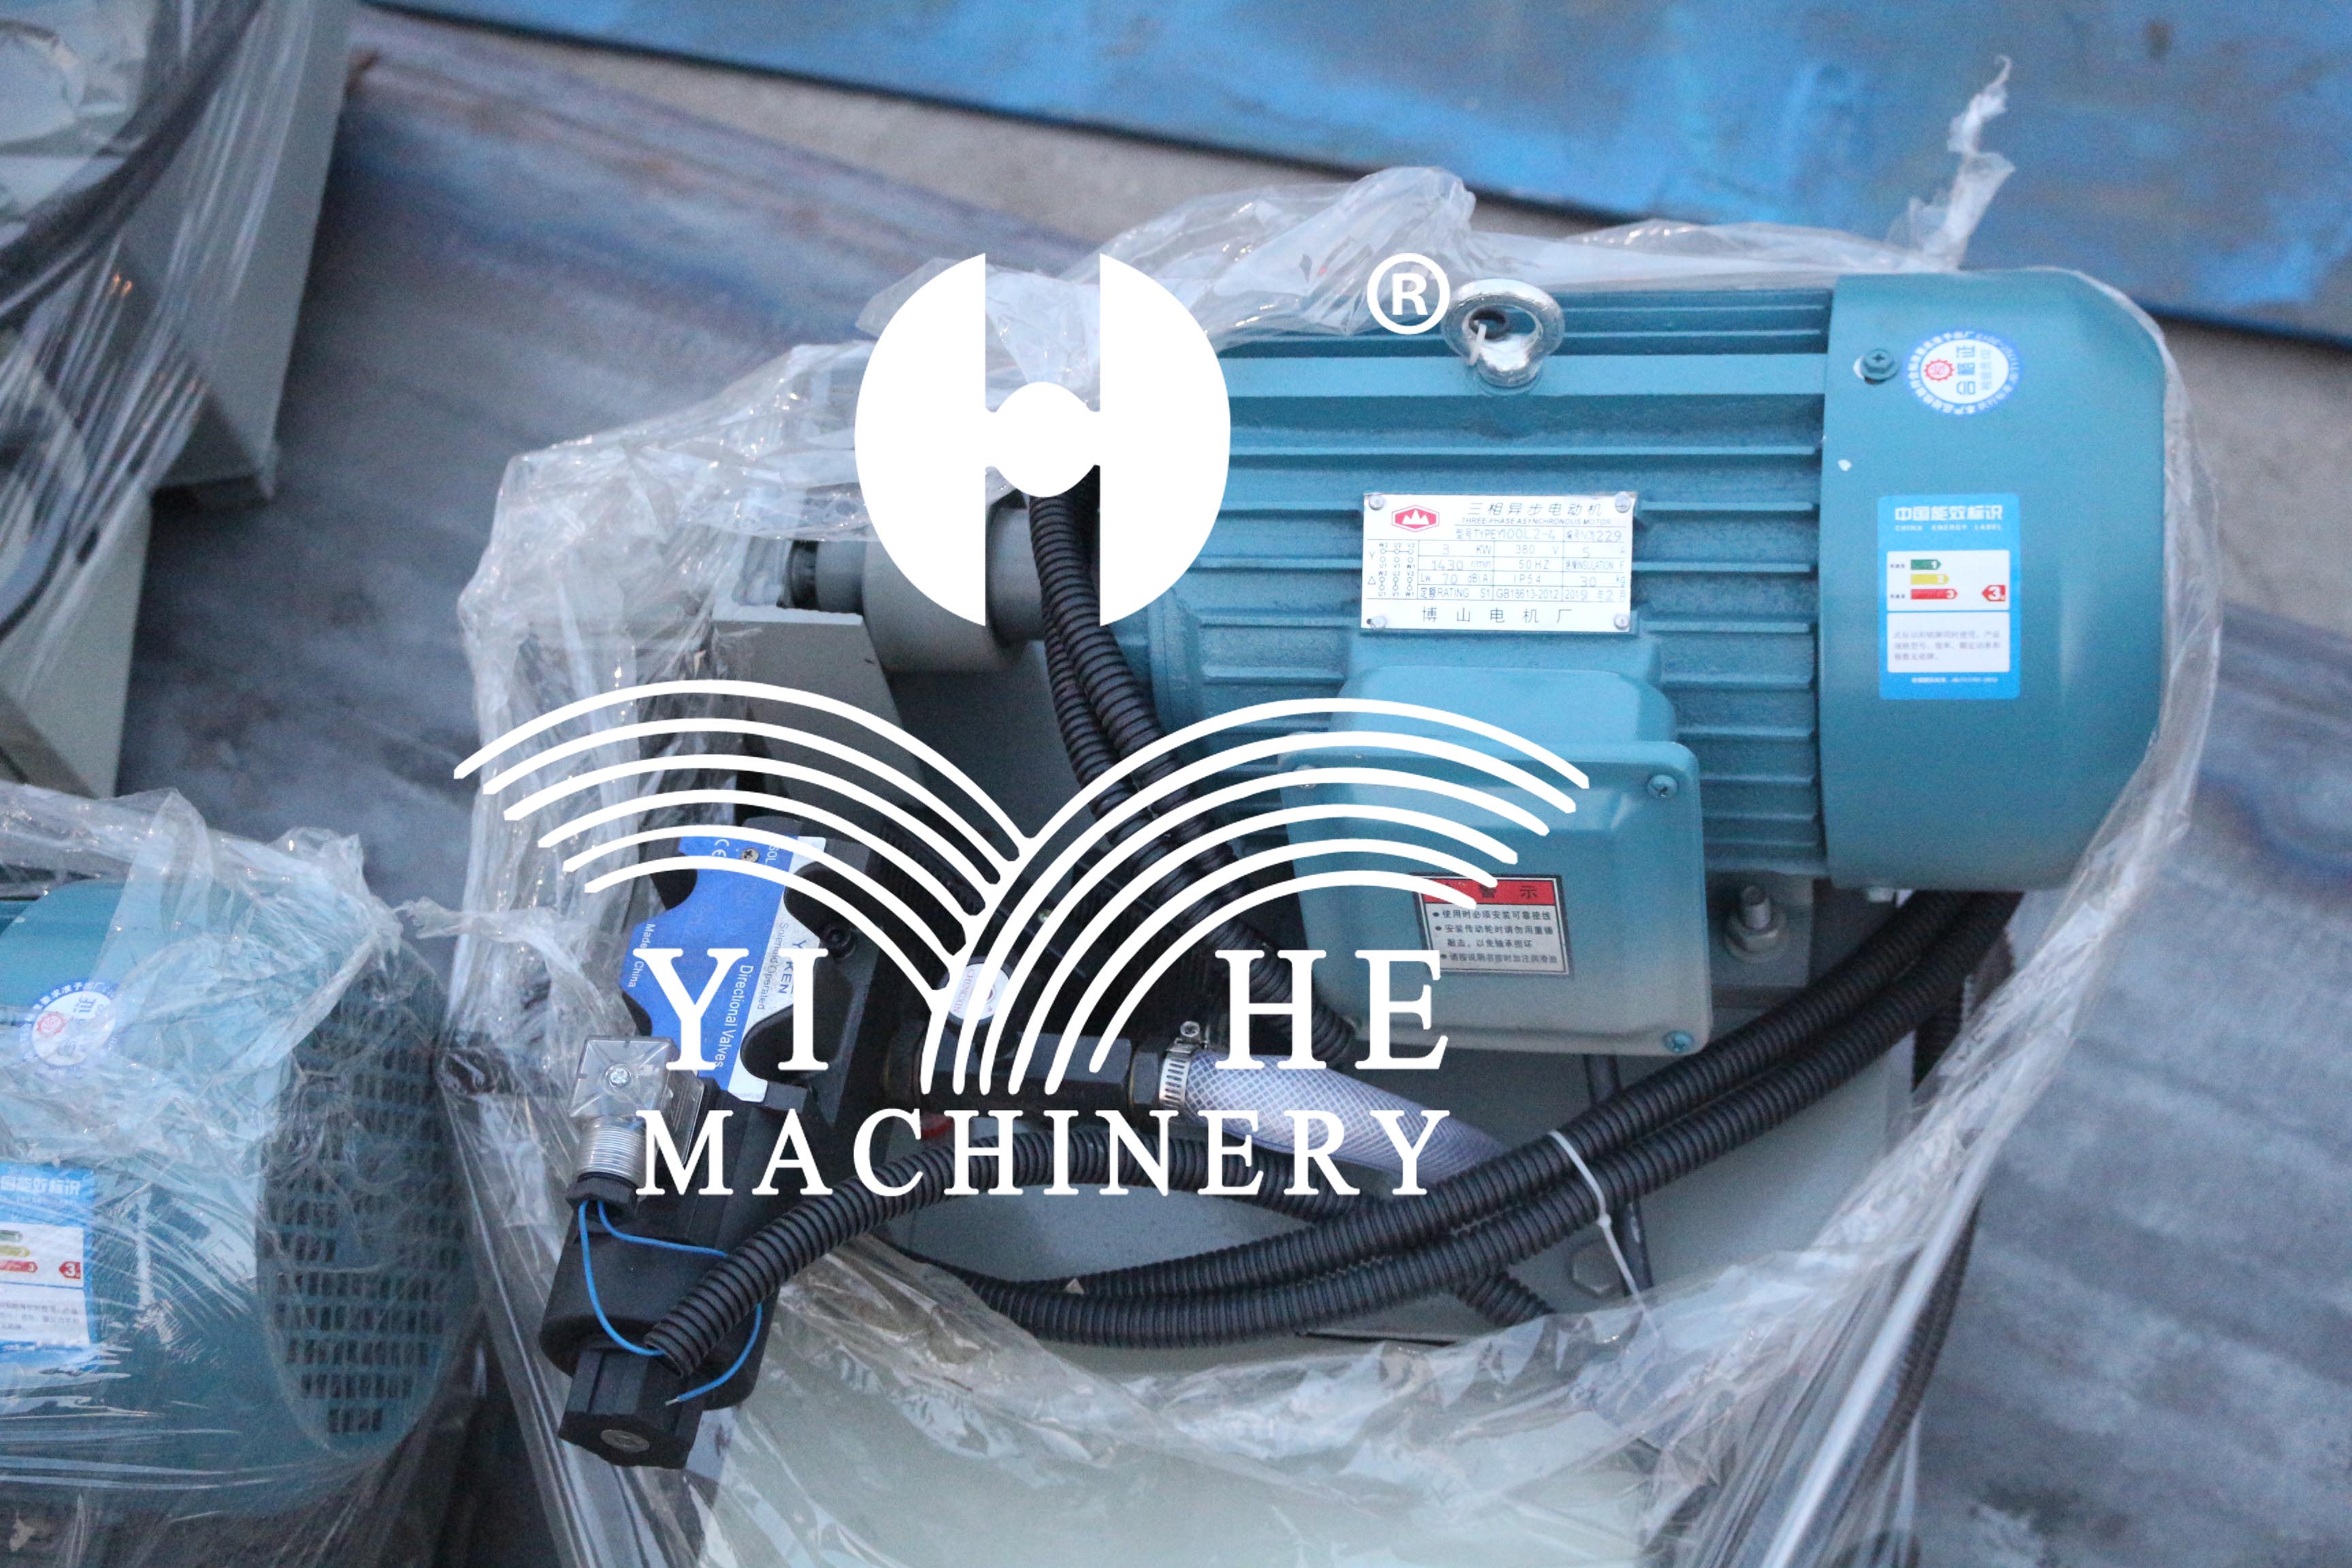 YIHE MACHINERY plywood cold press loading